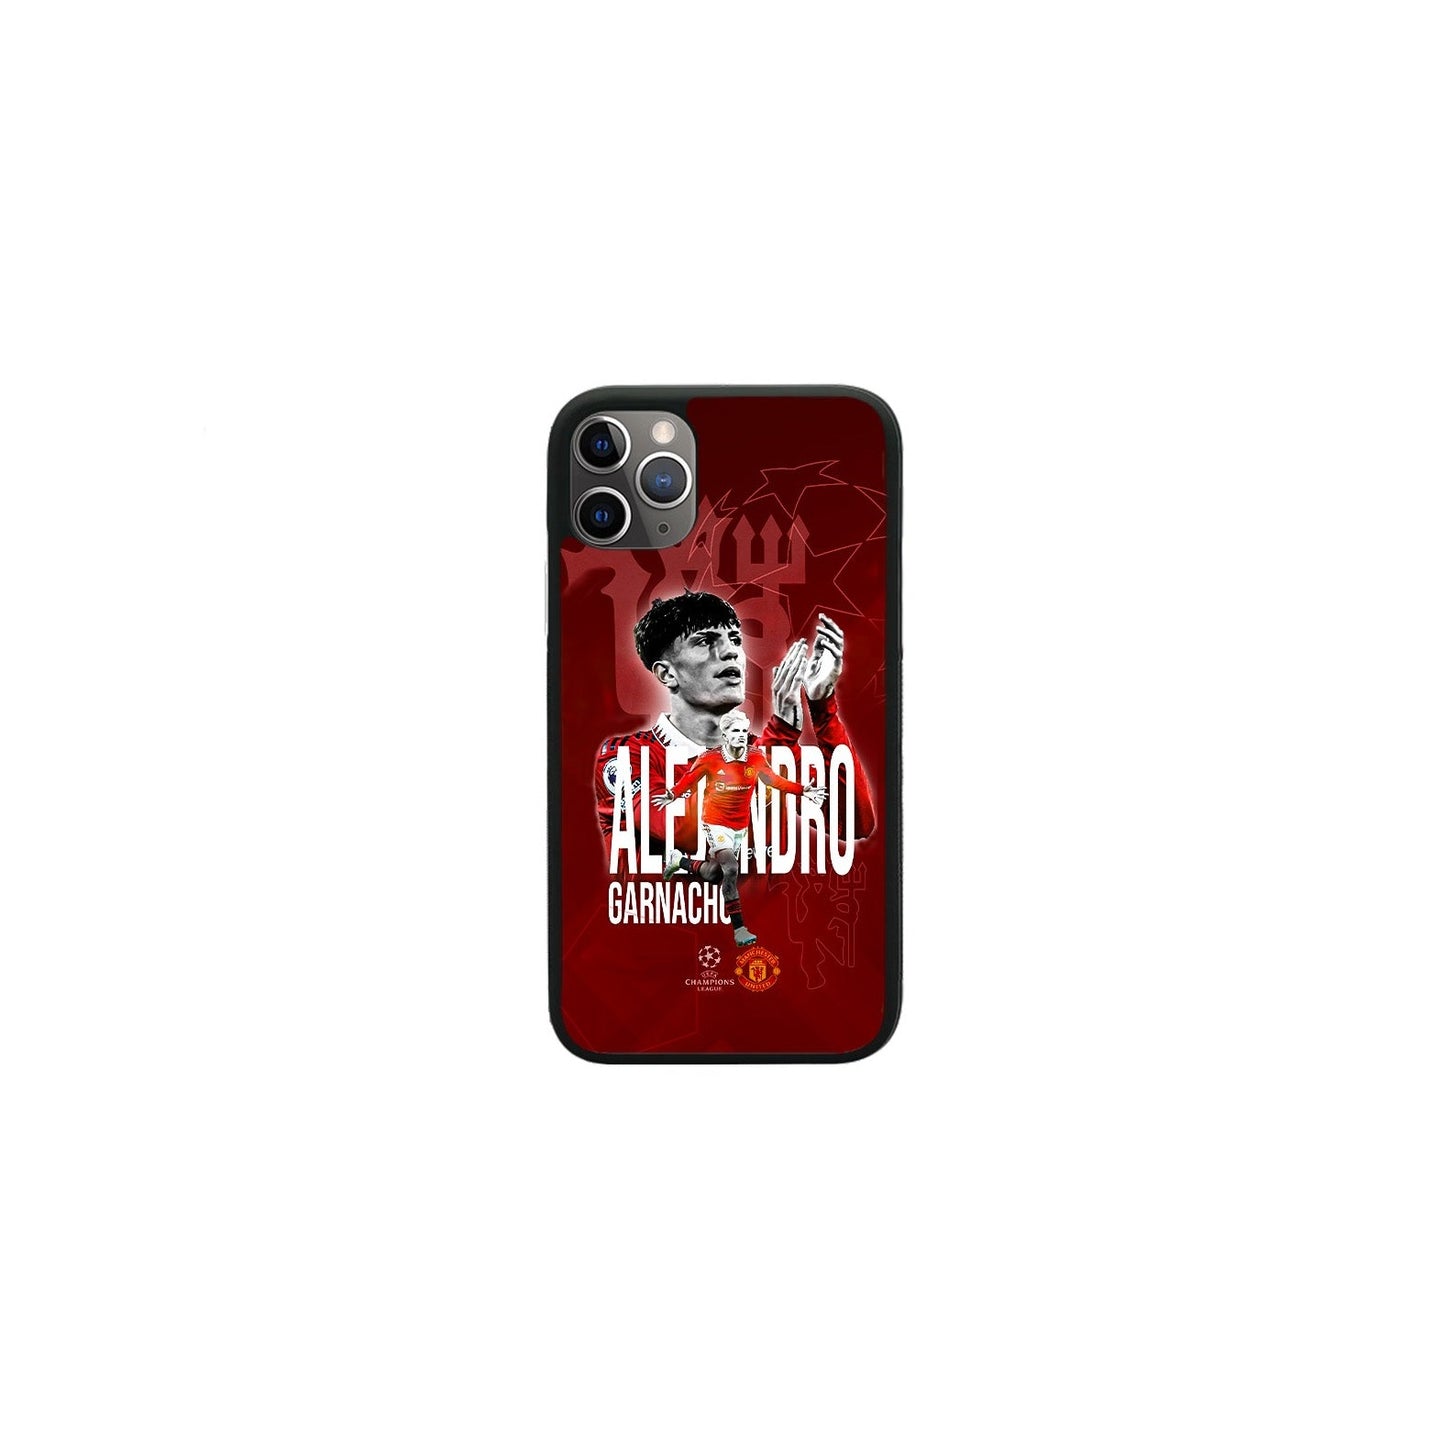 Alejandro Garnacho Limed Edition Phone Case